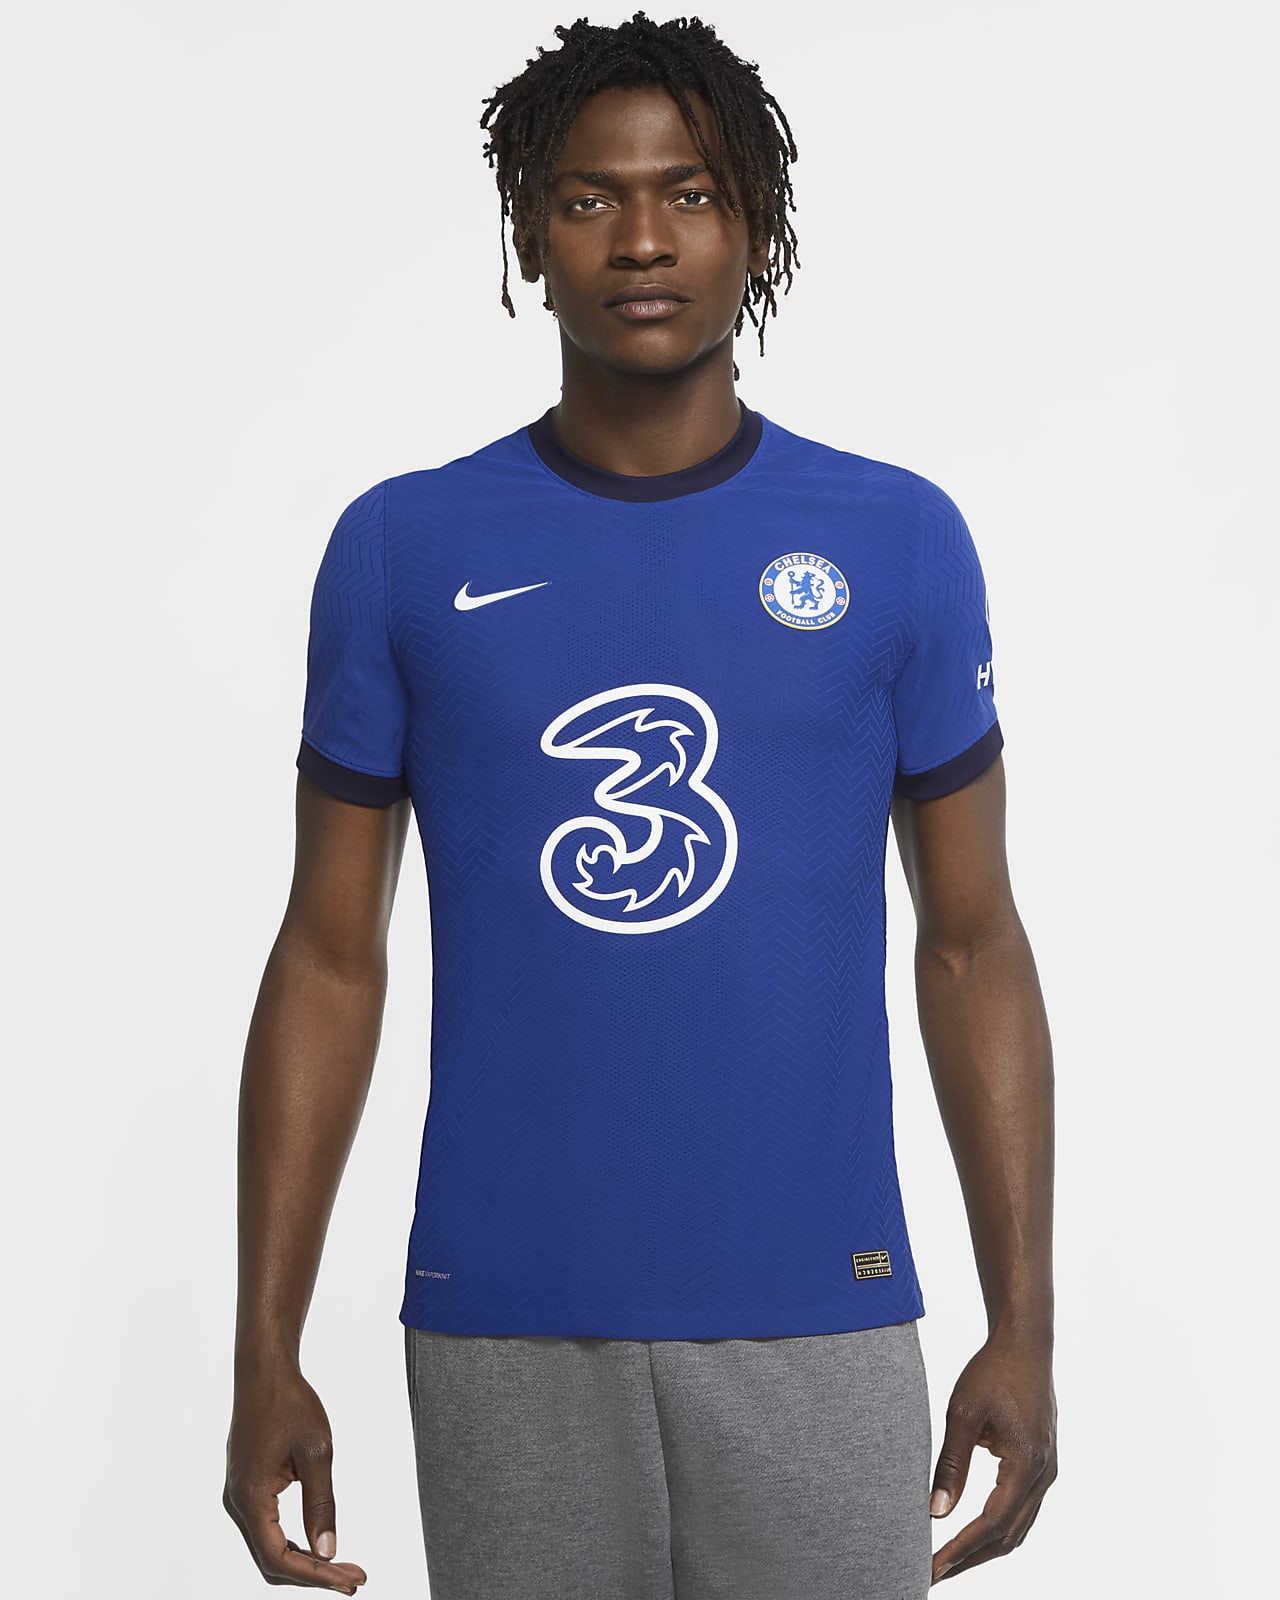 Chelsea FC 2020/21 Vapor Match Home Men's Soccer Jersey. Nike.com